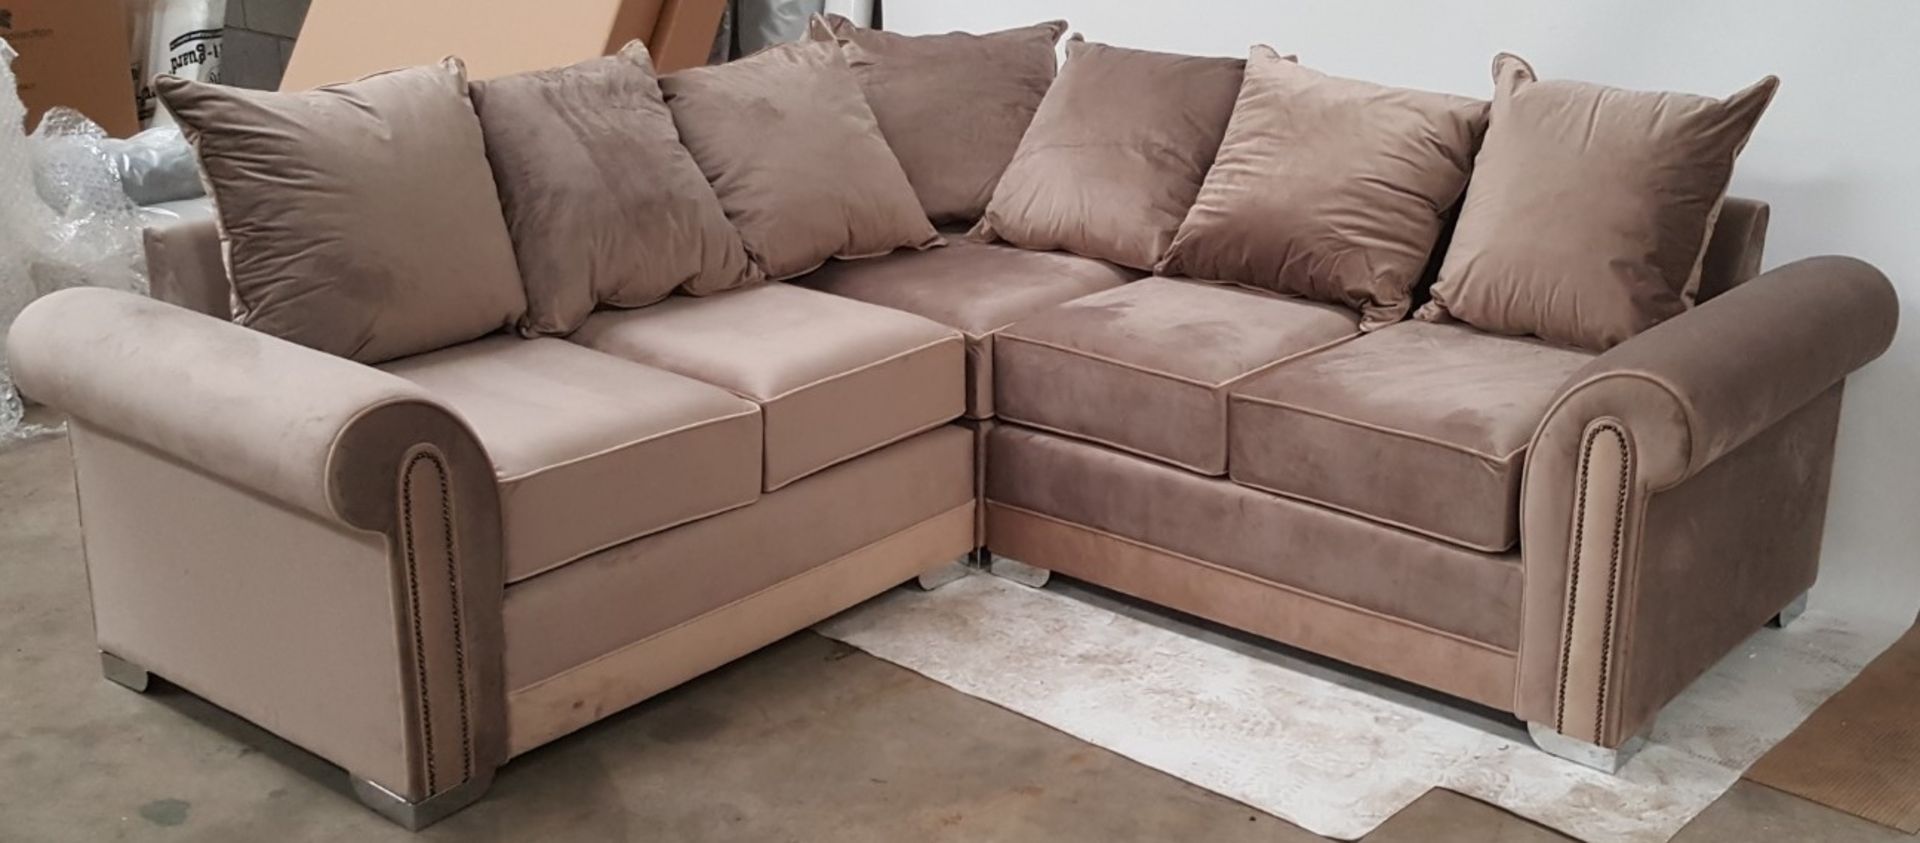 1 x Lavish Moroccan Brown Plush Velvet L-Shaped Corner Seater Sofa - Ref BY197 - Image 4 of 7